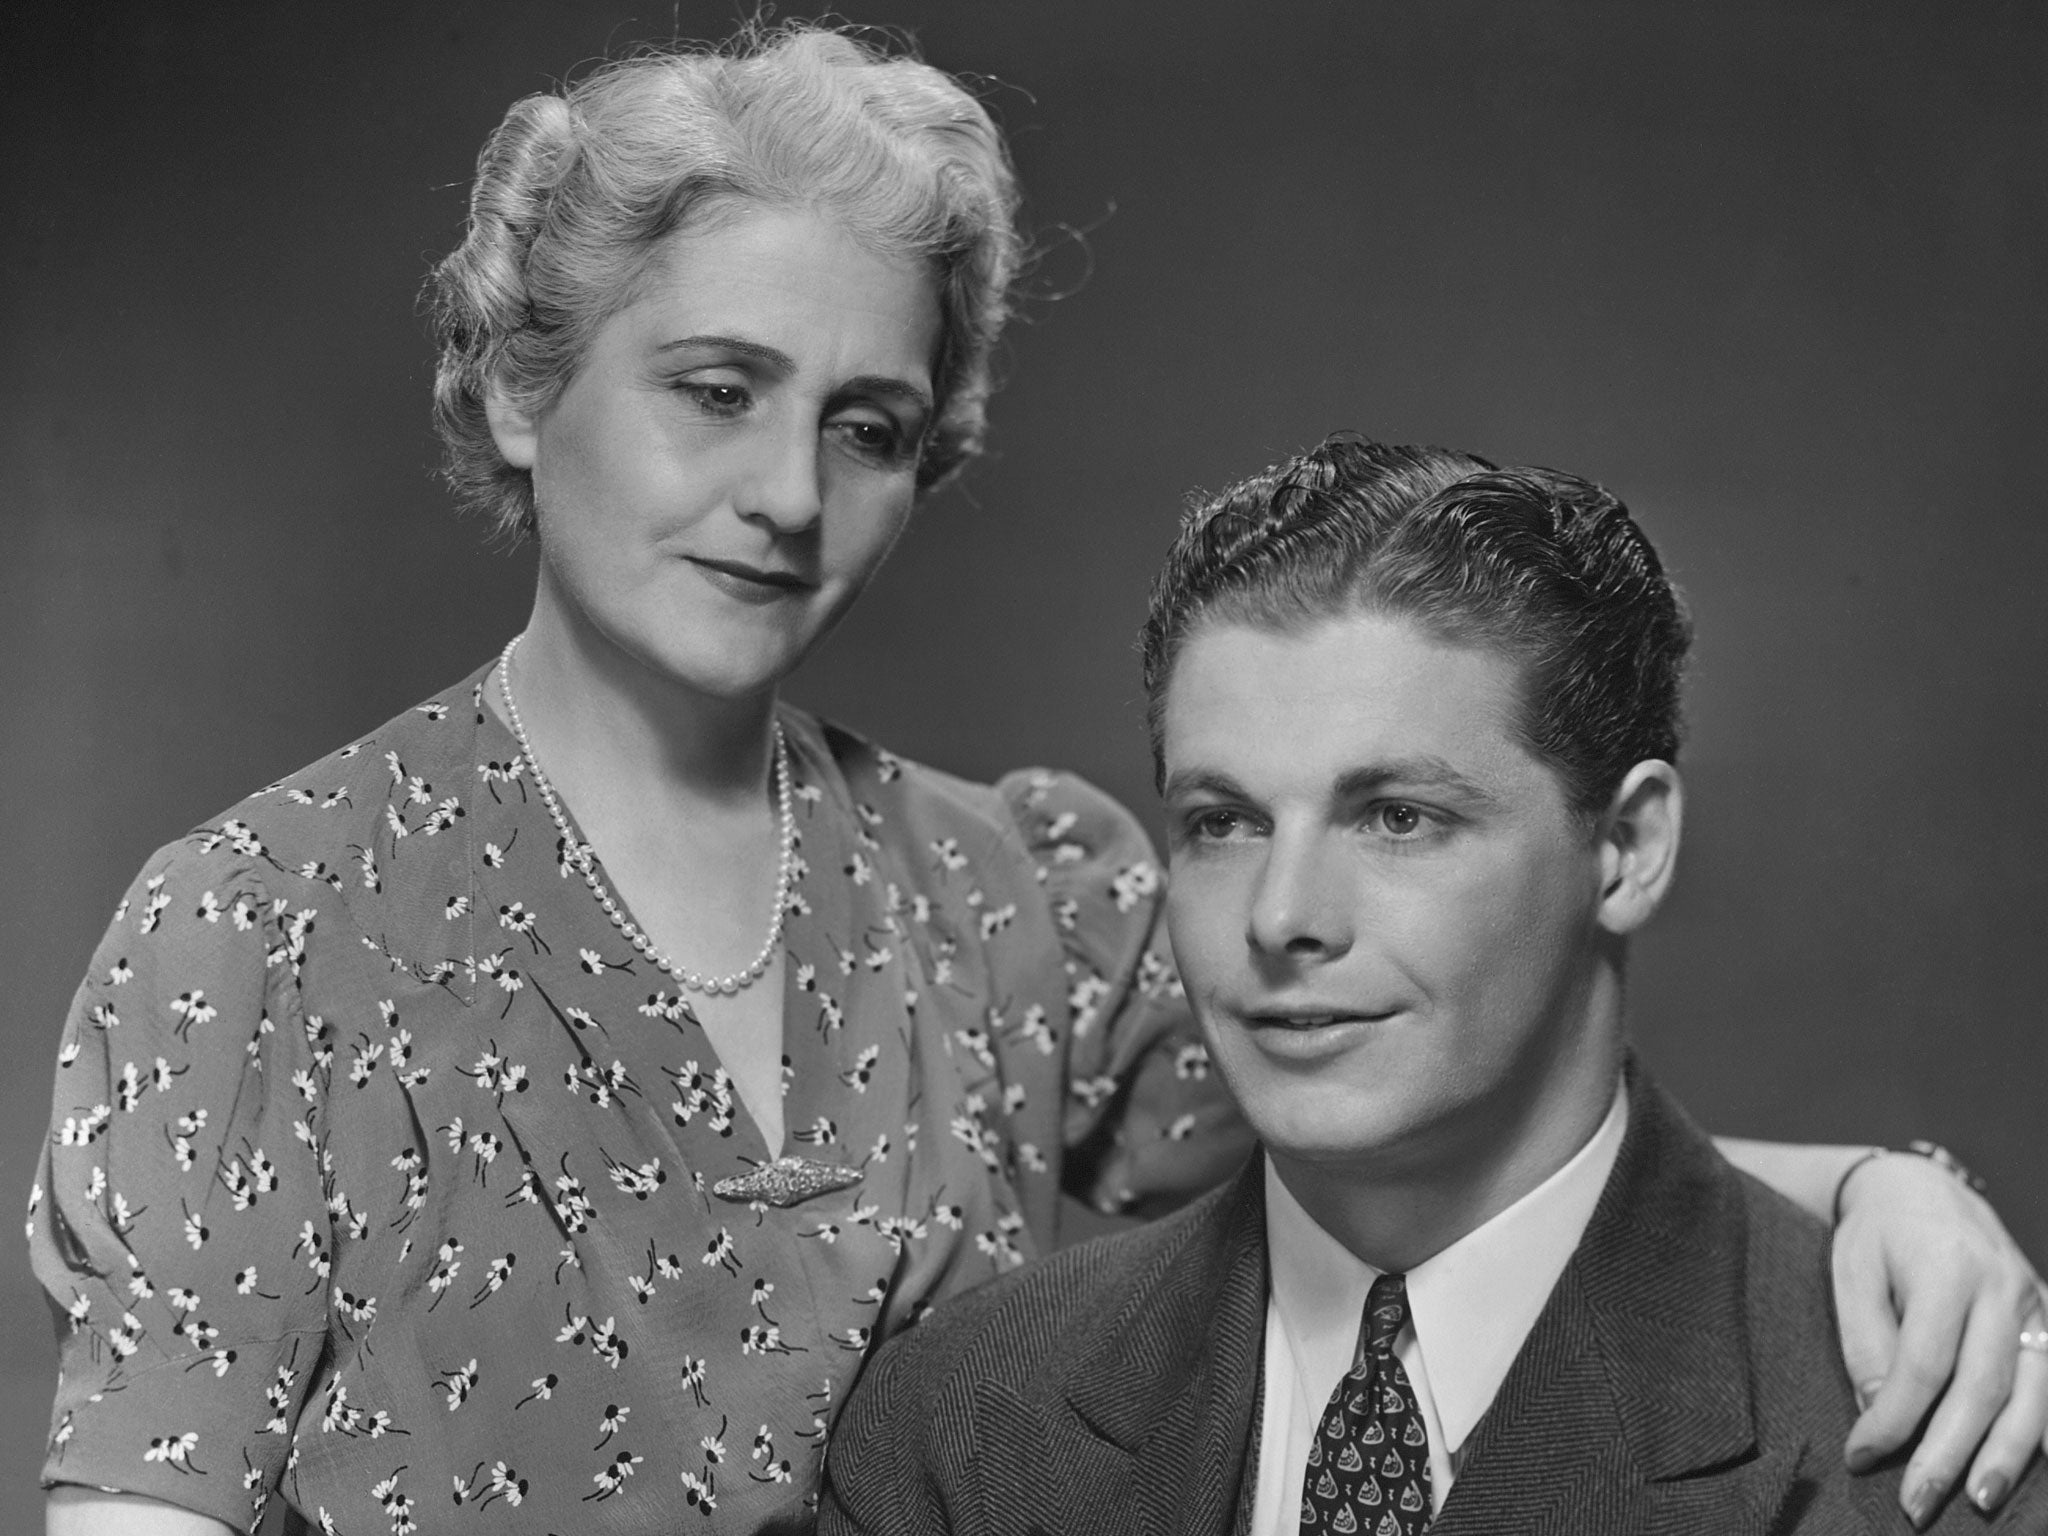 CIRCA 1950s: Mother and son.